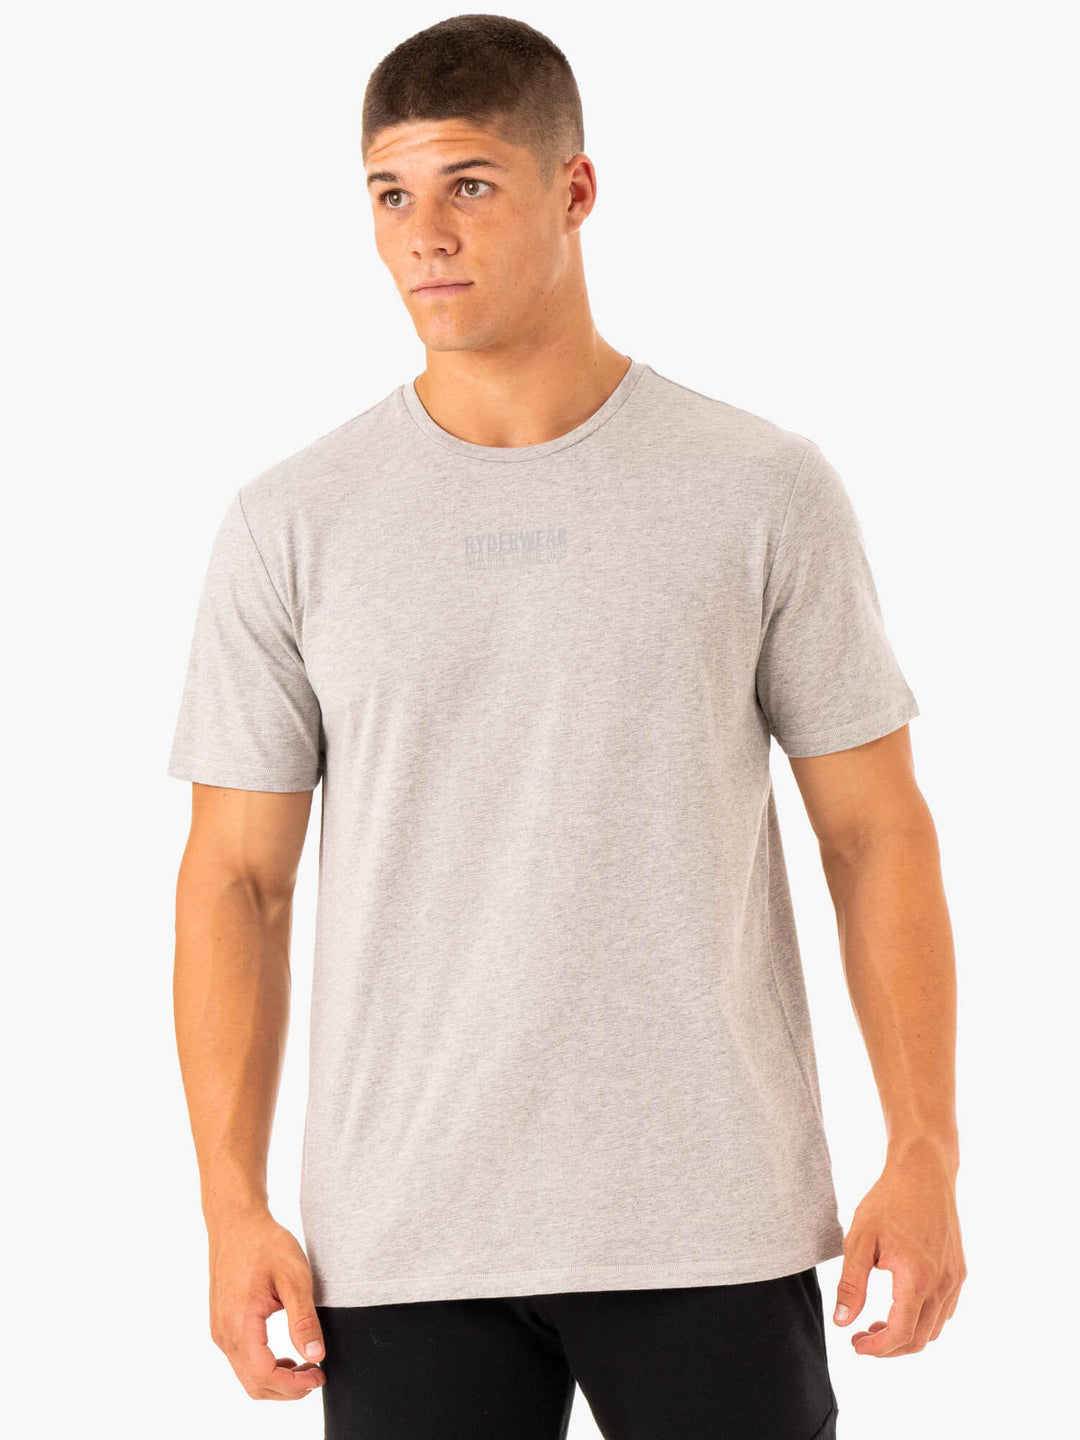 Limitless T-Shirt - Grey Marl Clothing Ryderwear 